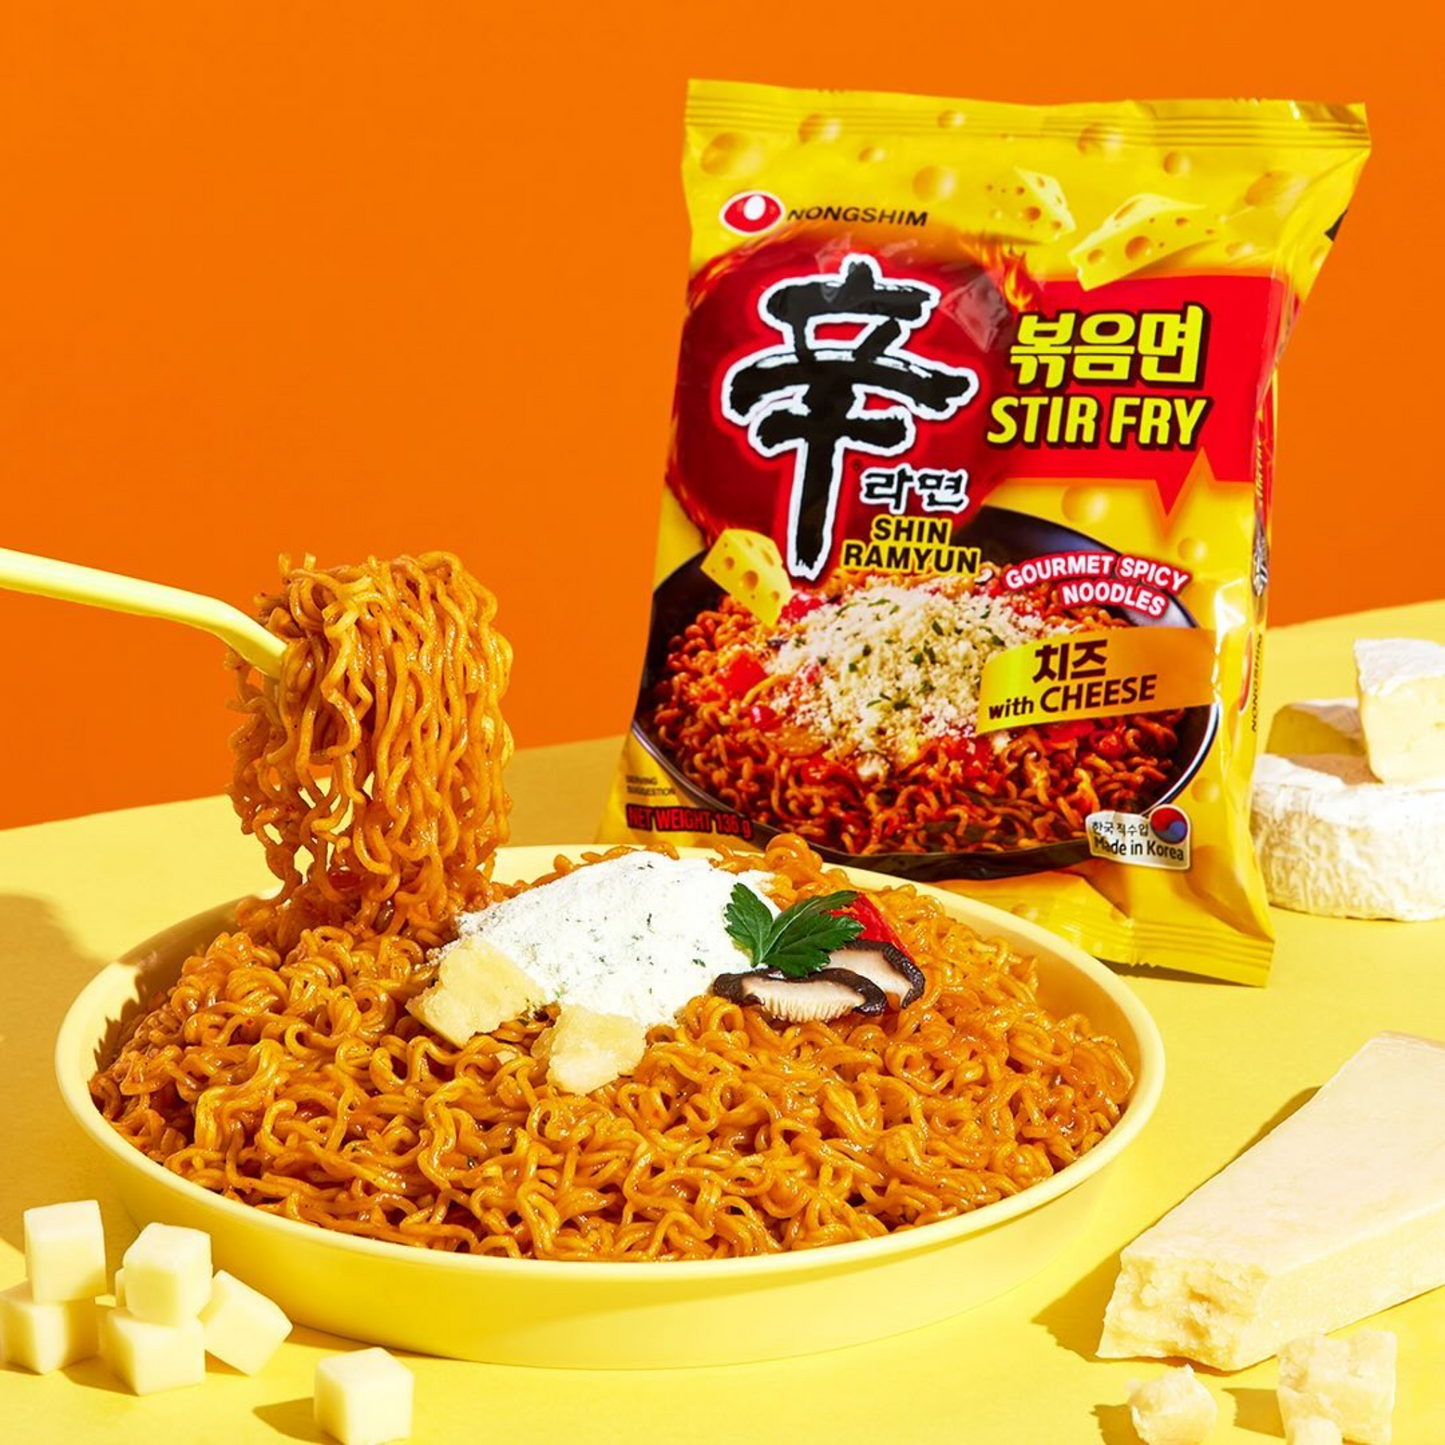 Nongshim Shin Ramyun With Cheese Stir Fry Ramen Box